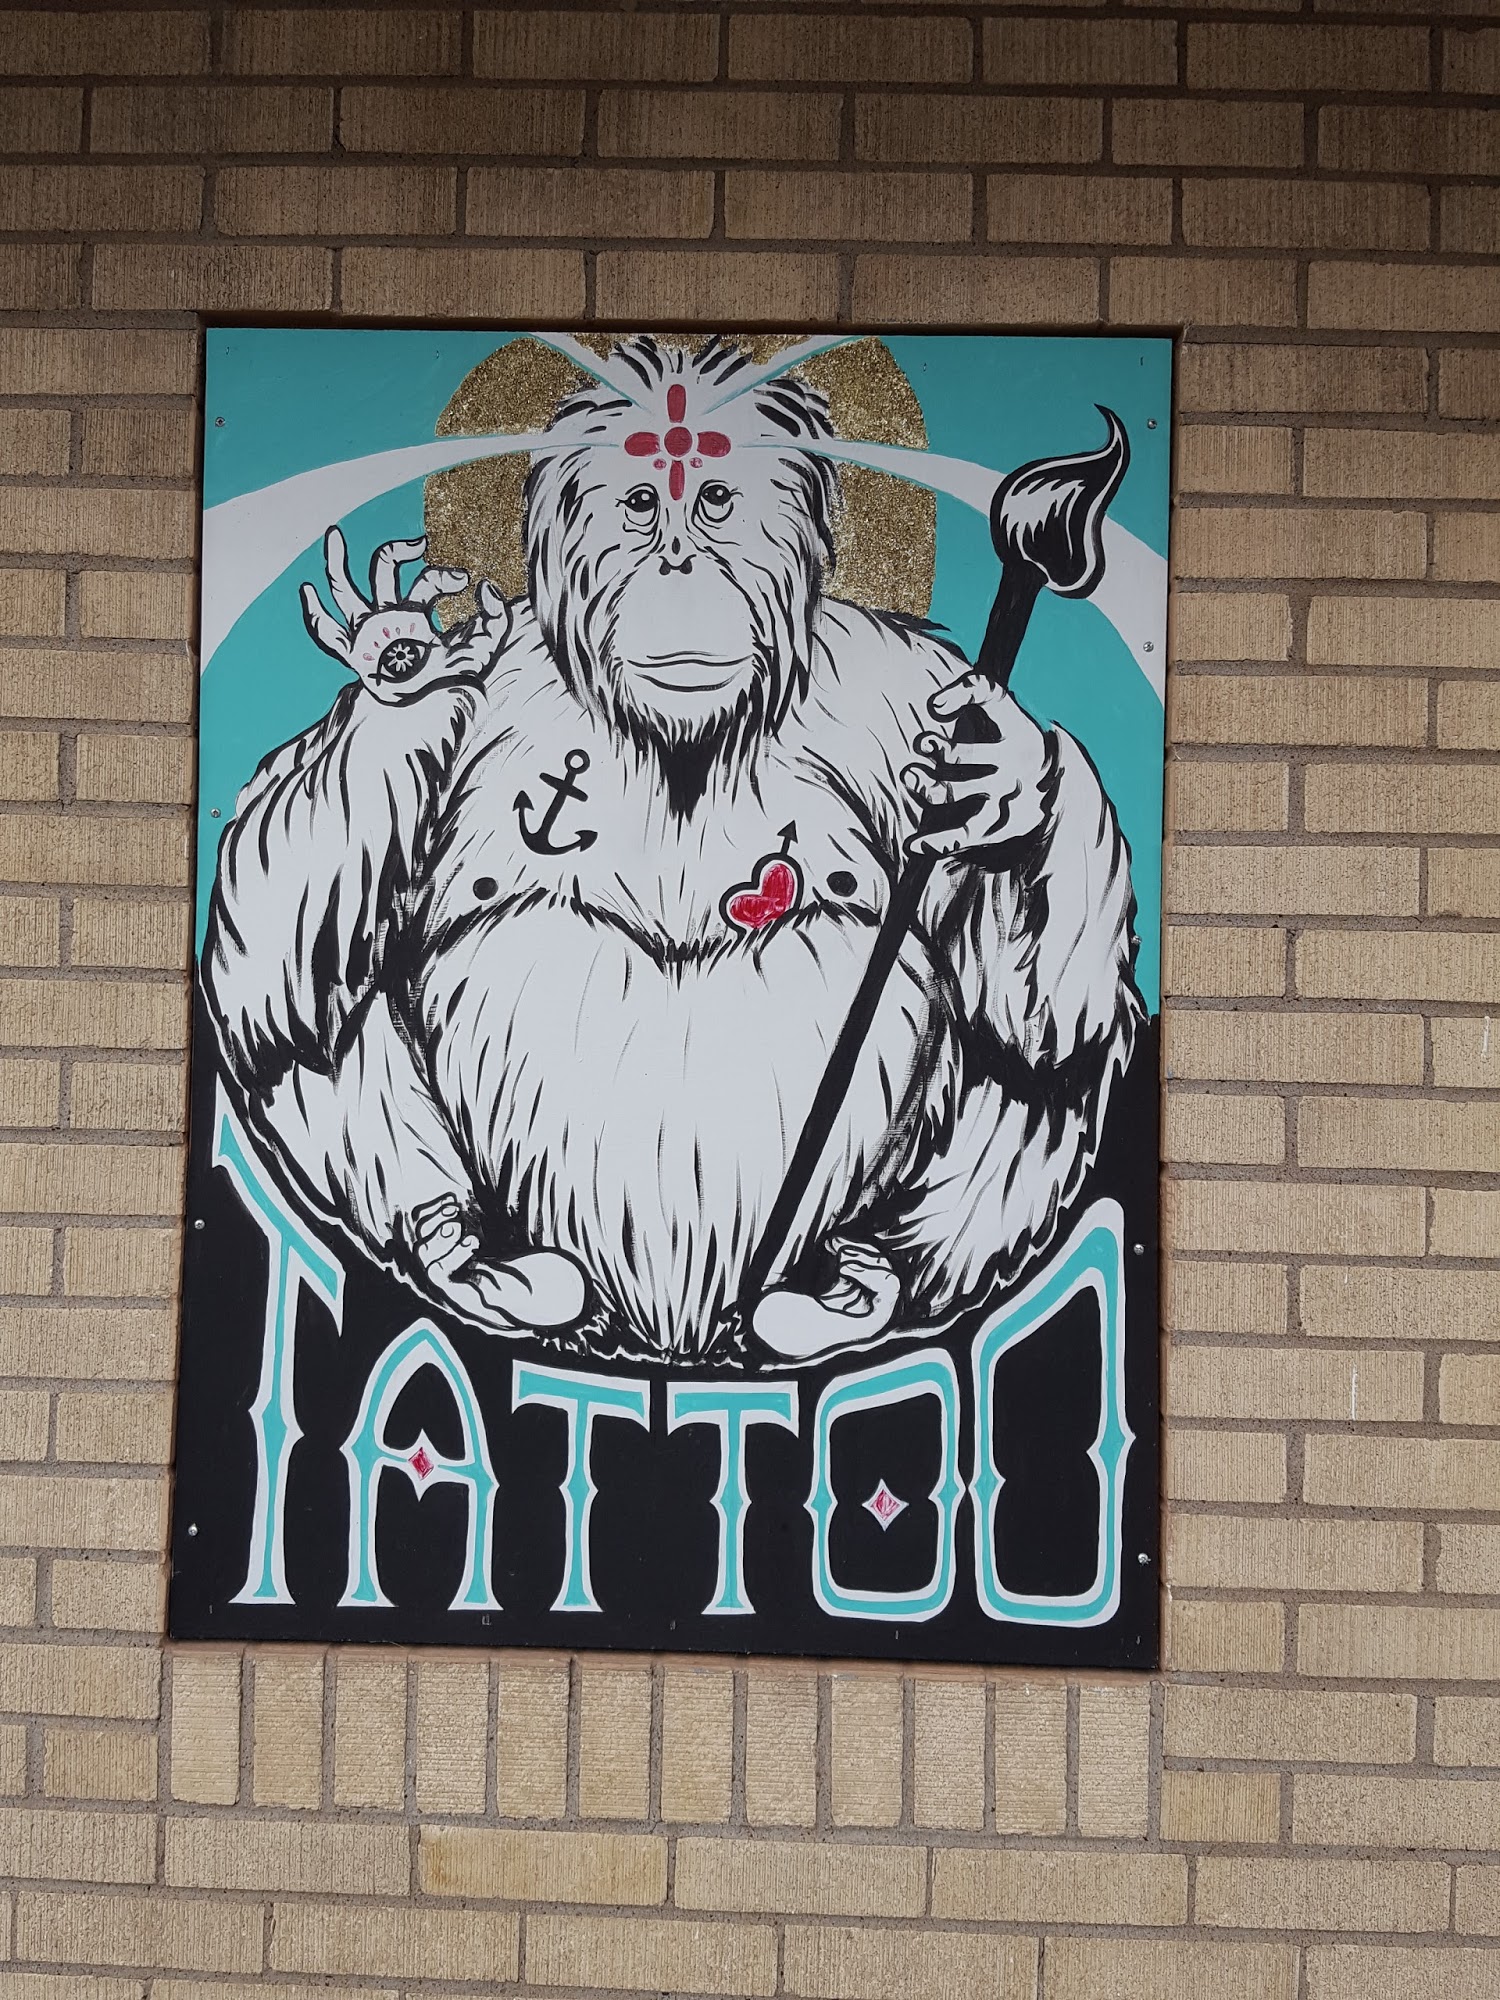 Painted Monkey Tattoo